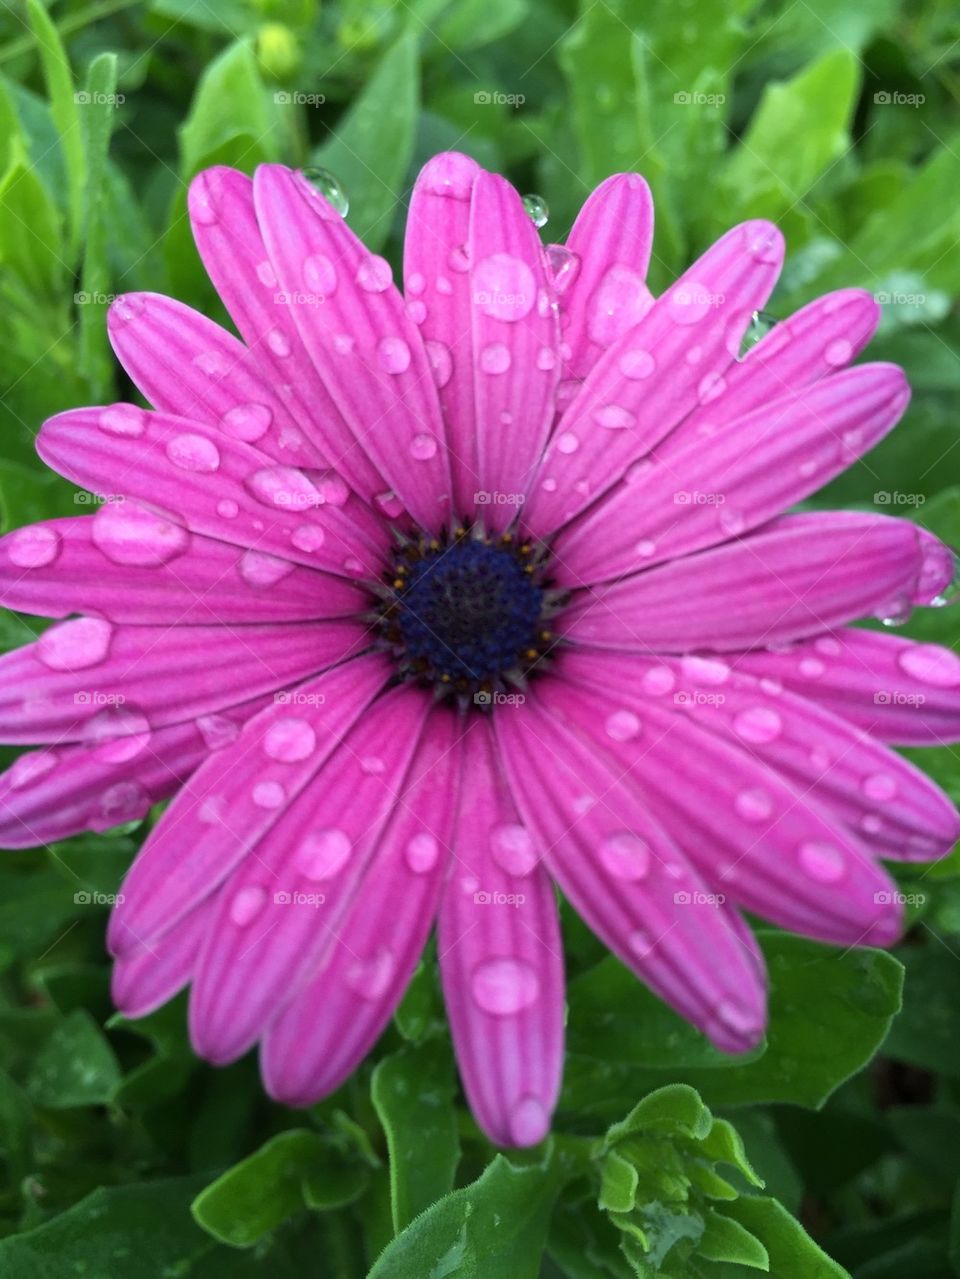 Rain droplets on flower